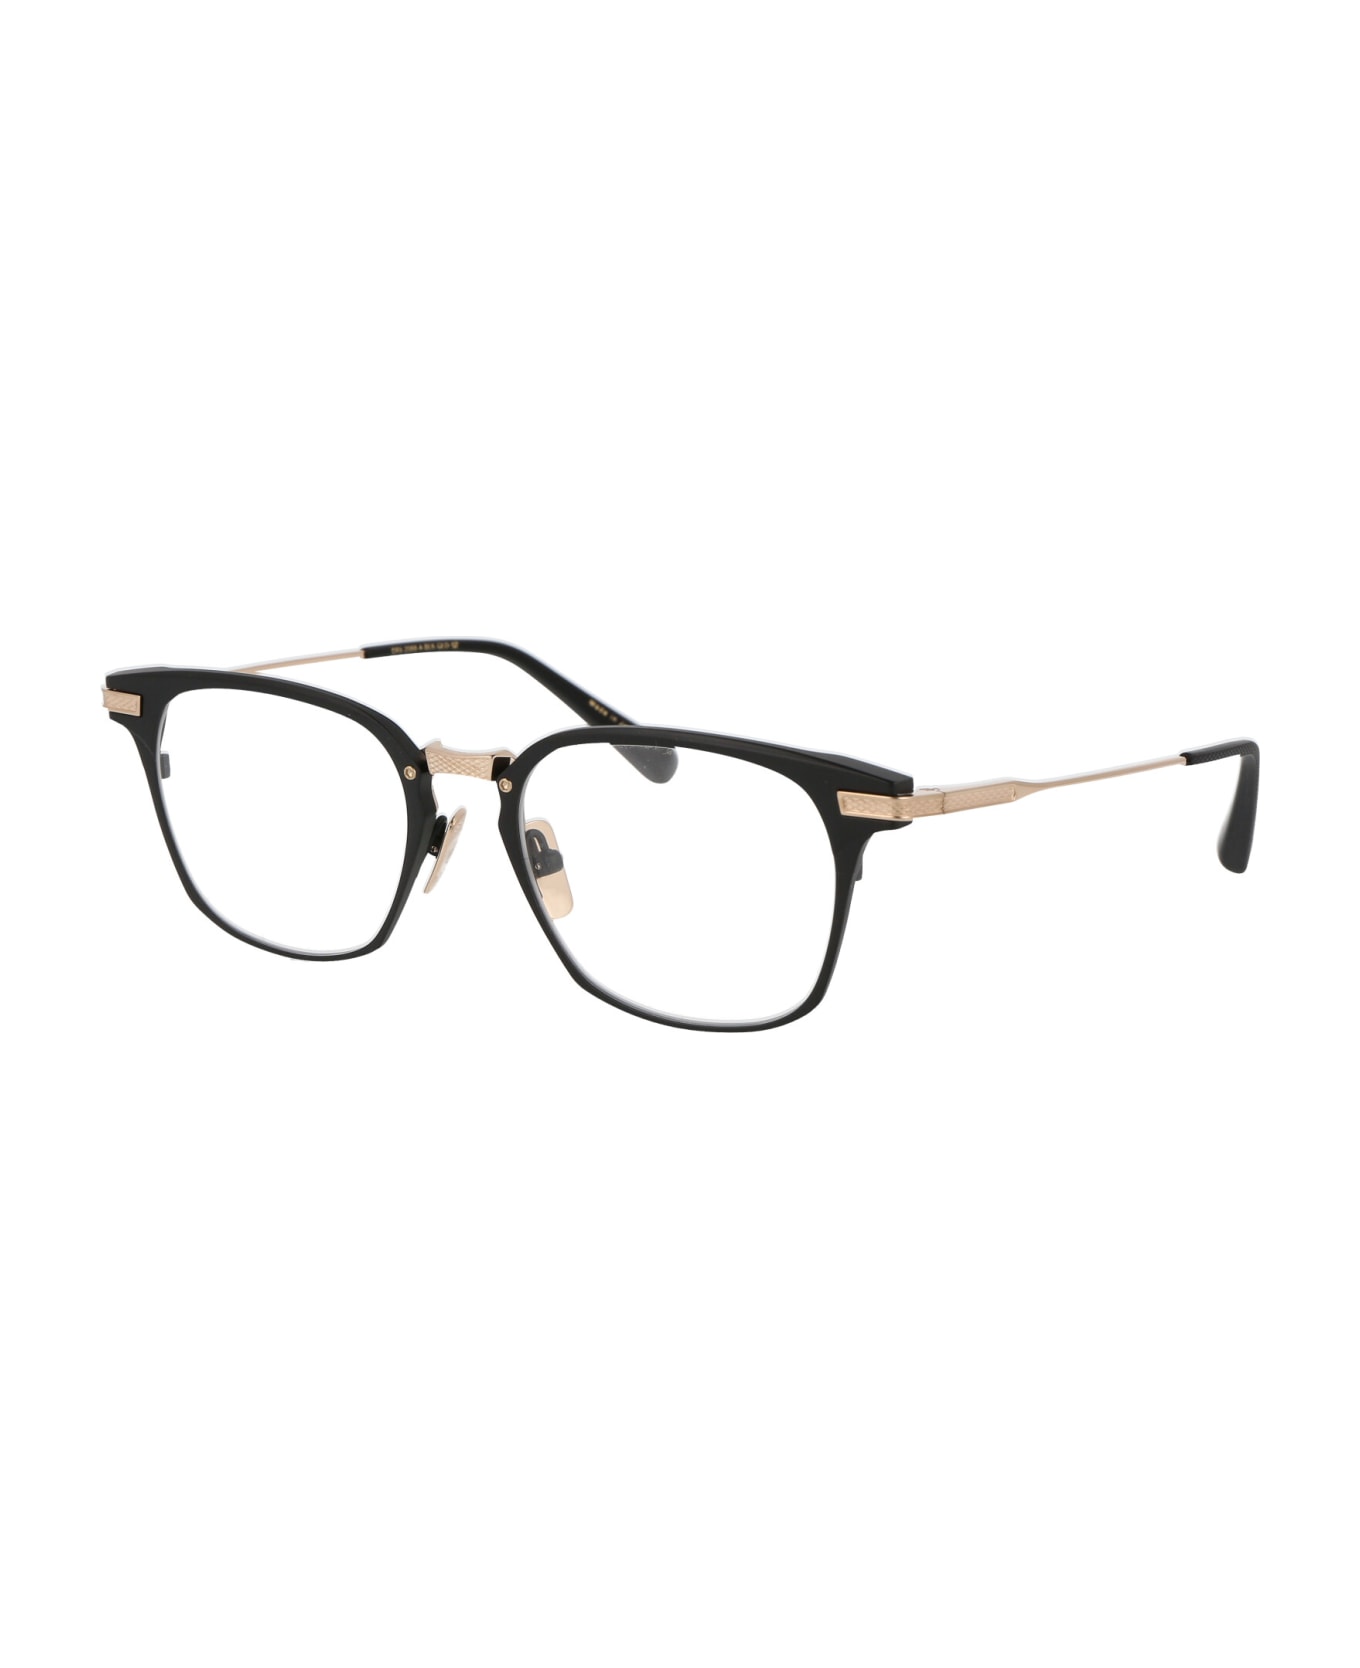 Dita Union Glasses - Matte Black-12K Gold アイウェア